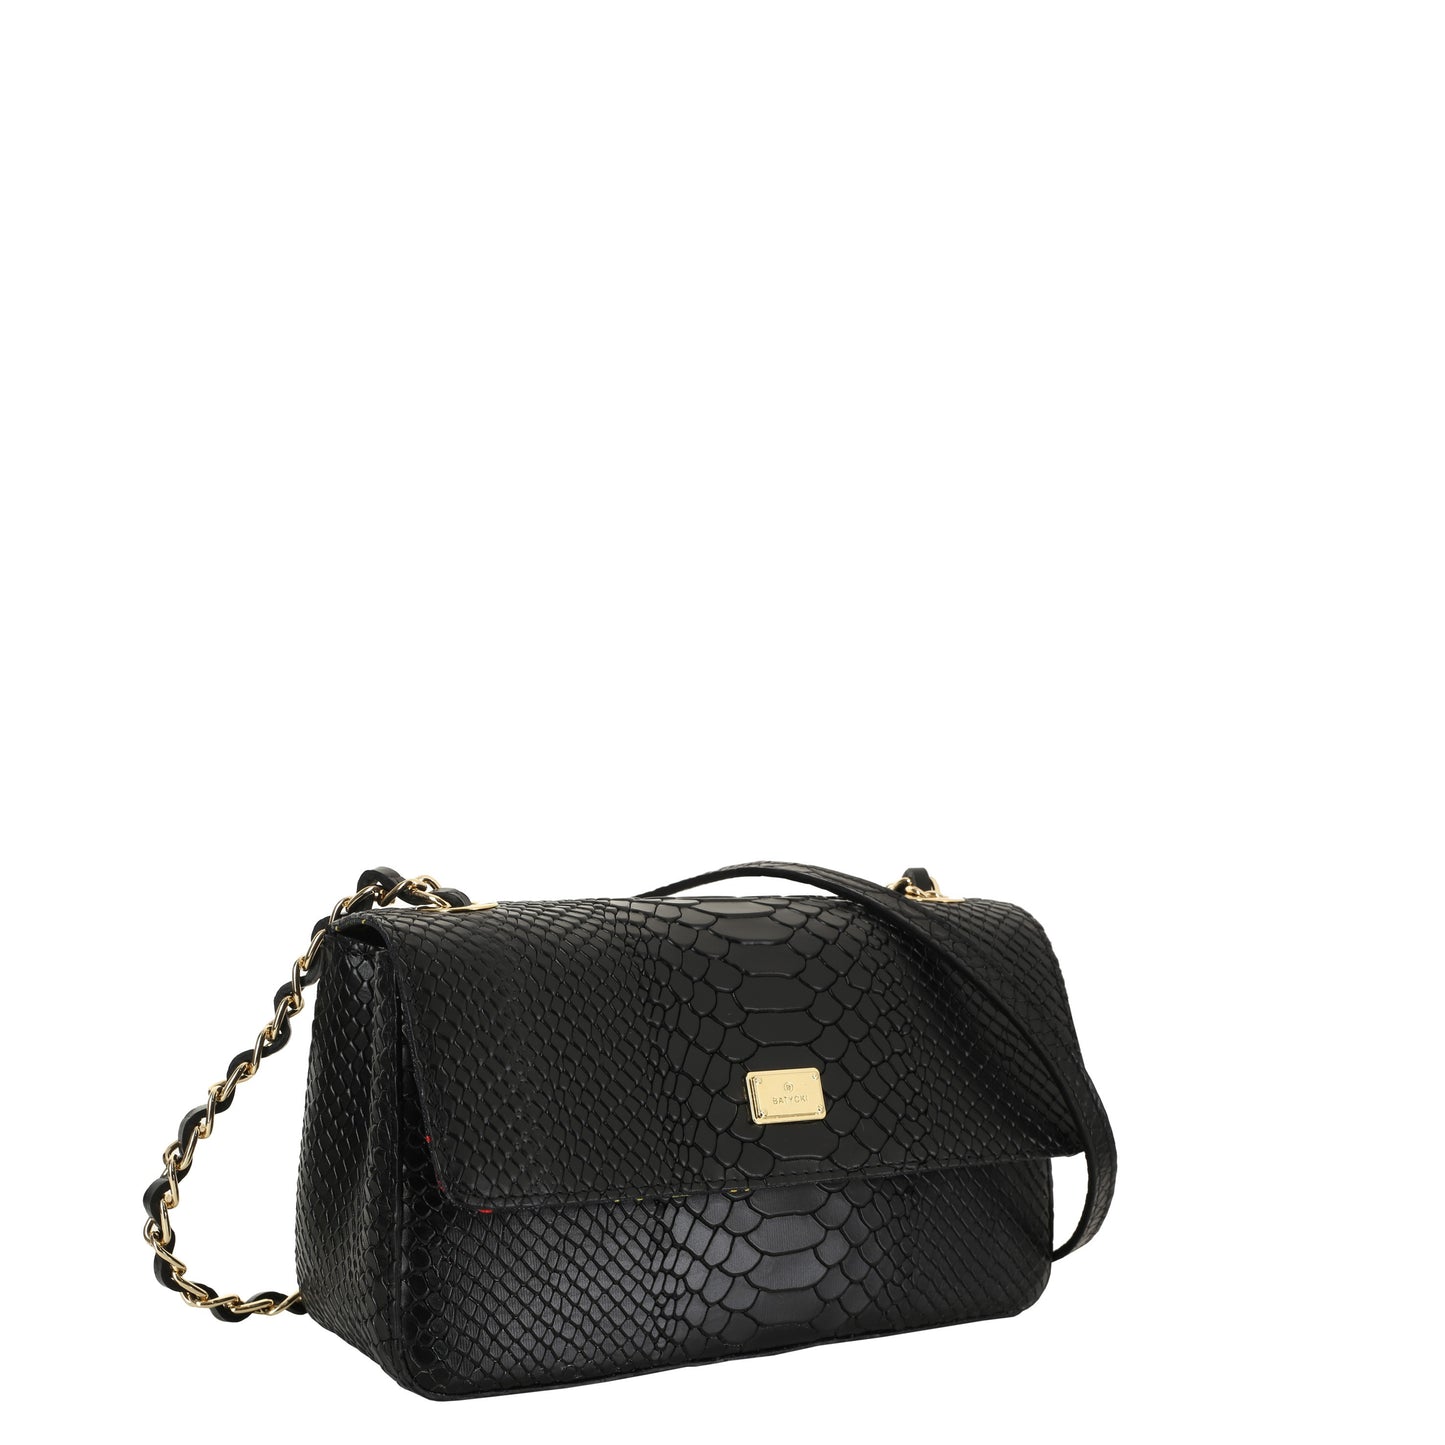 BUFFY BLACK women's leather handbag